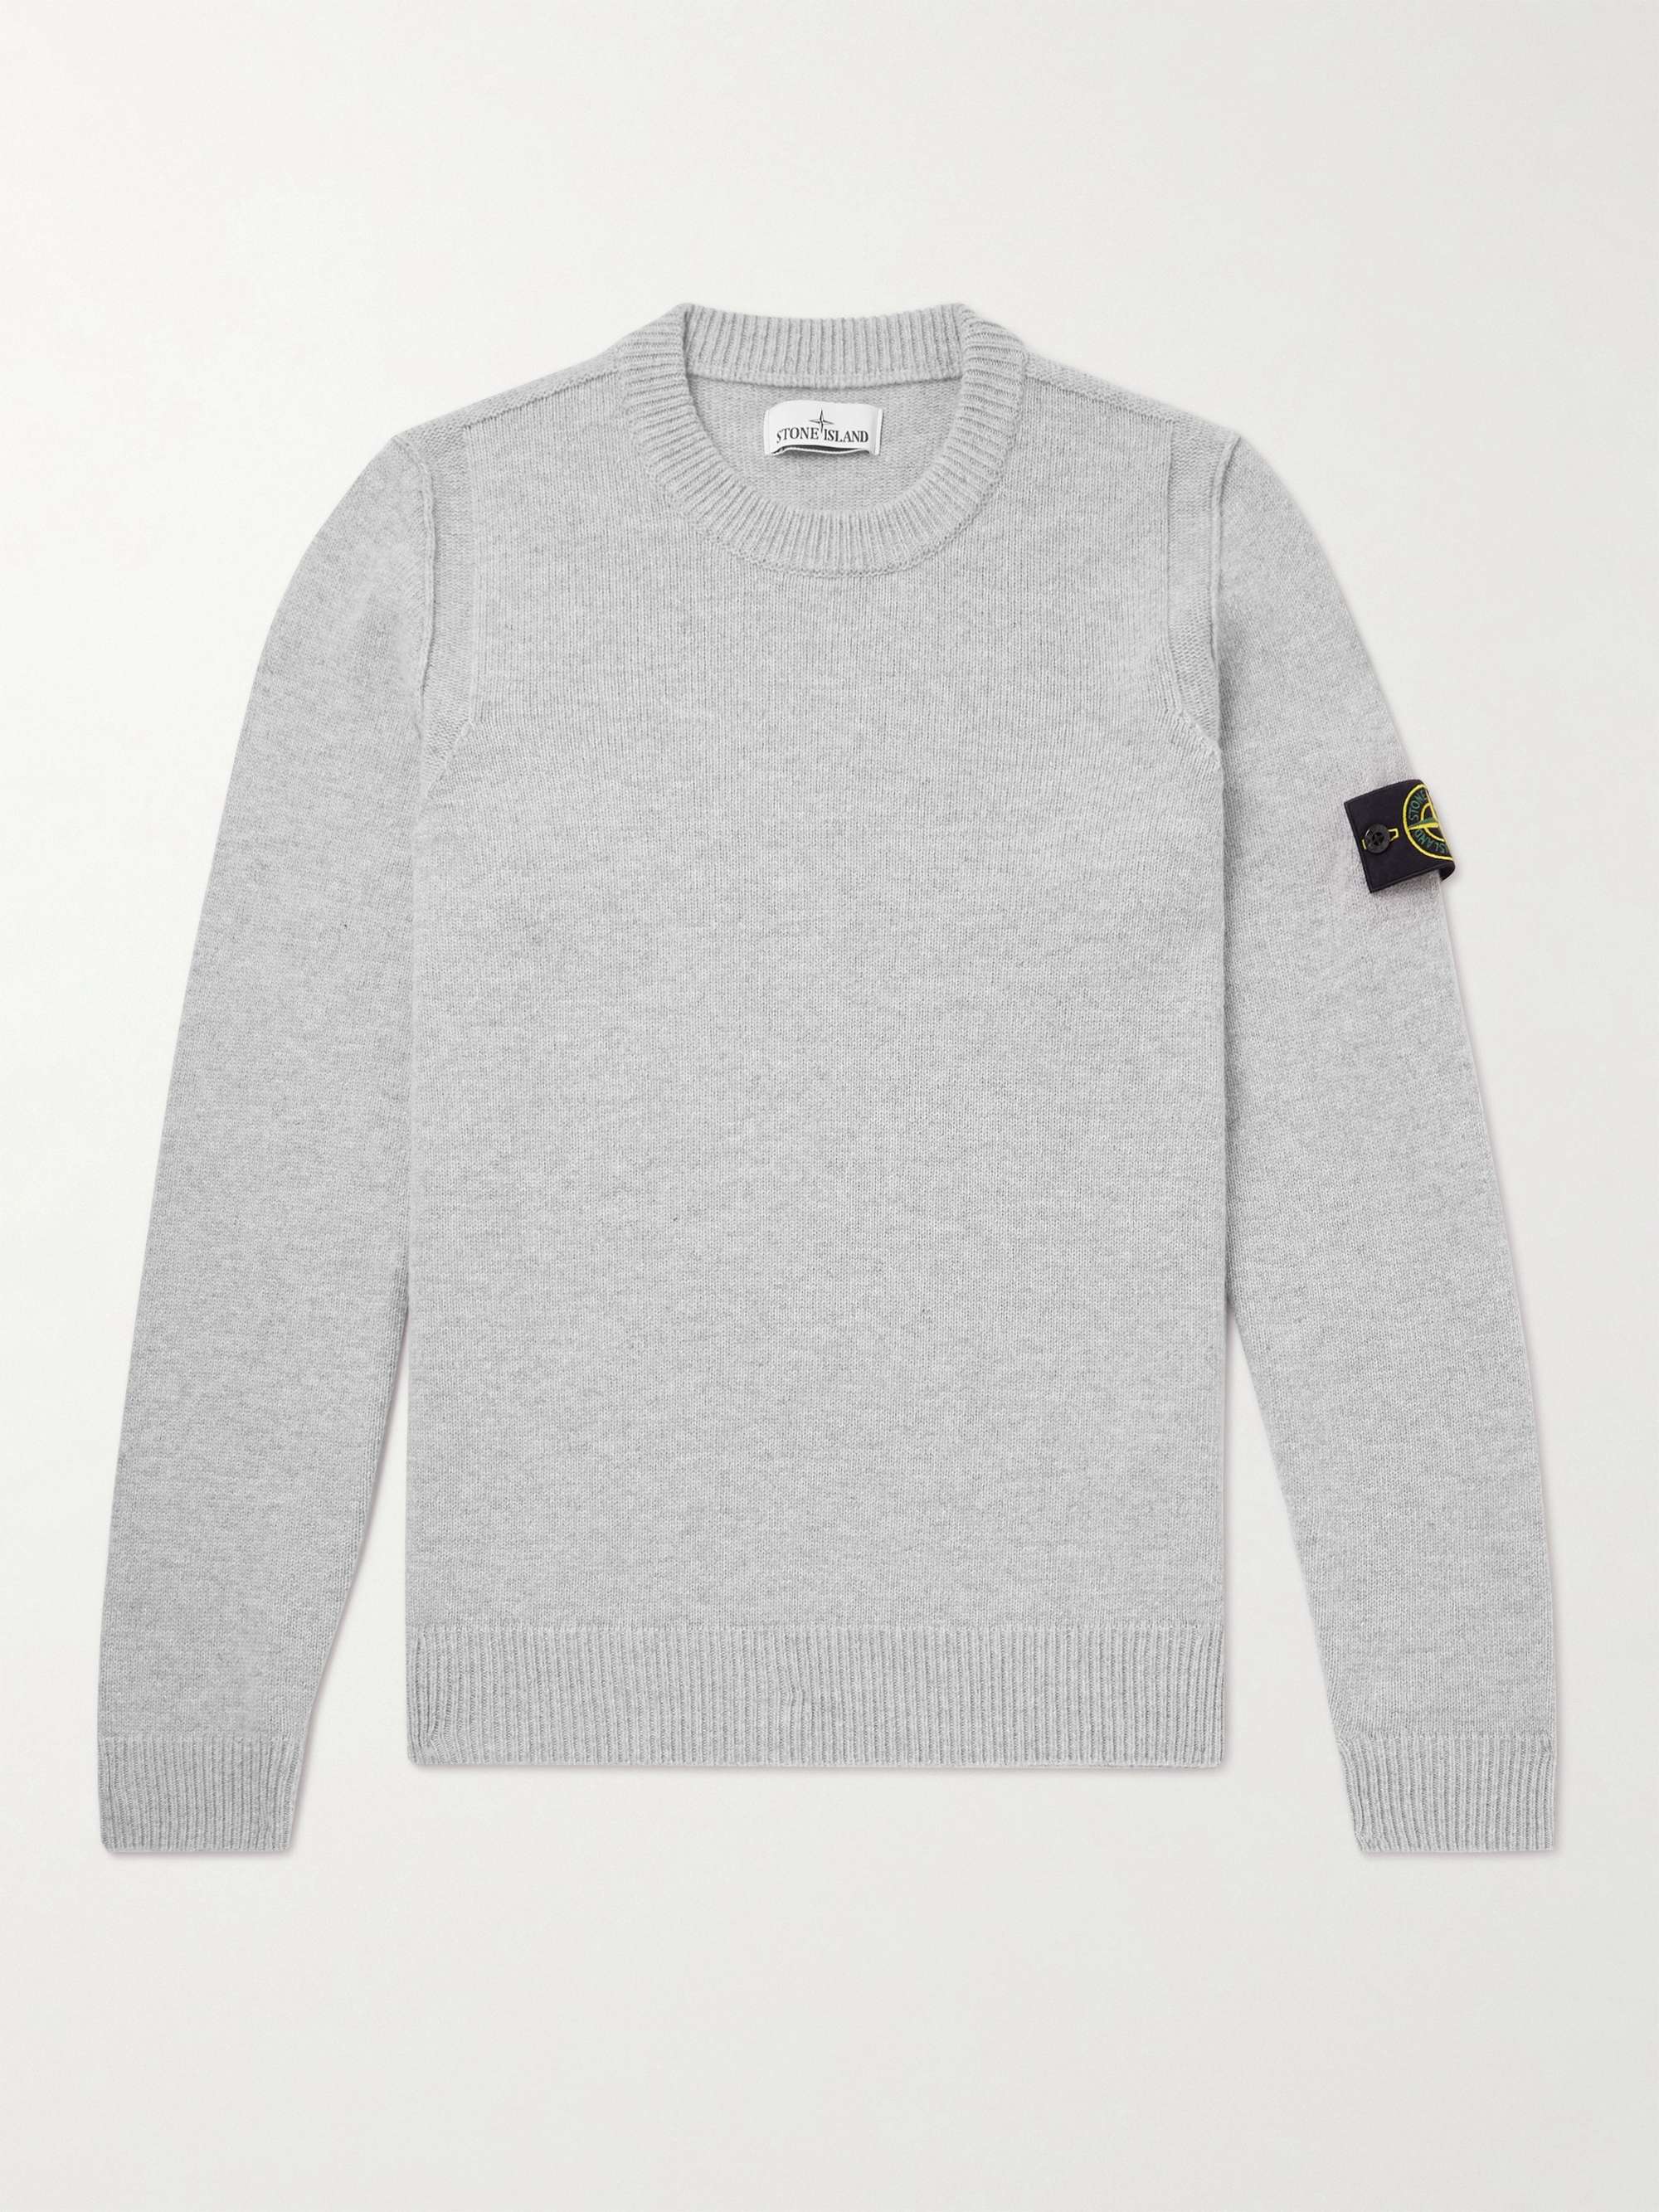 STONE ISLAND Logo-Appliquéd Wool-Blend Sweater for Men | MR PORTER